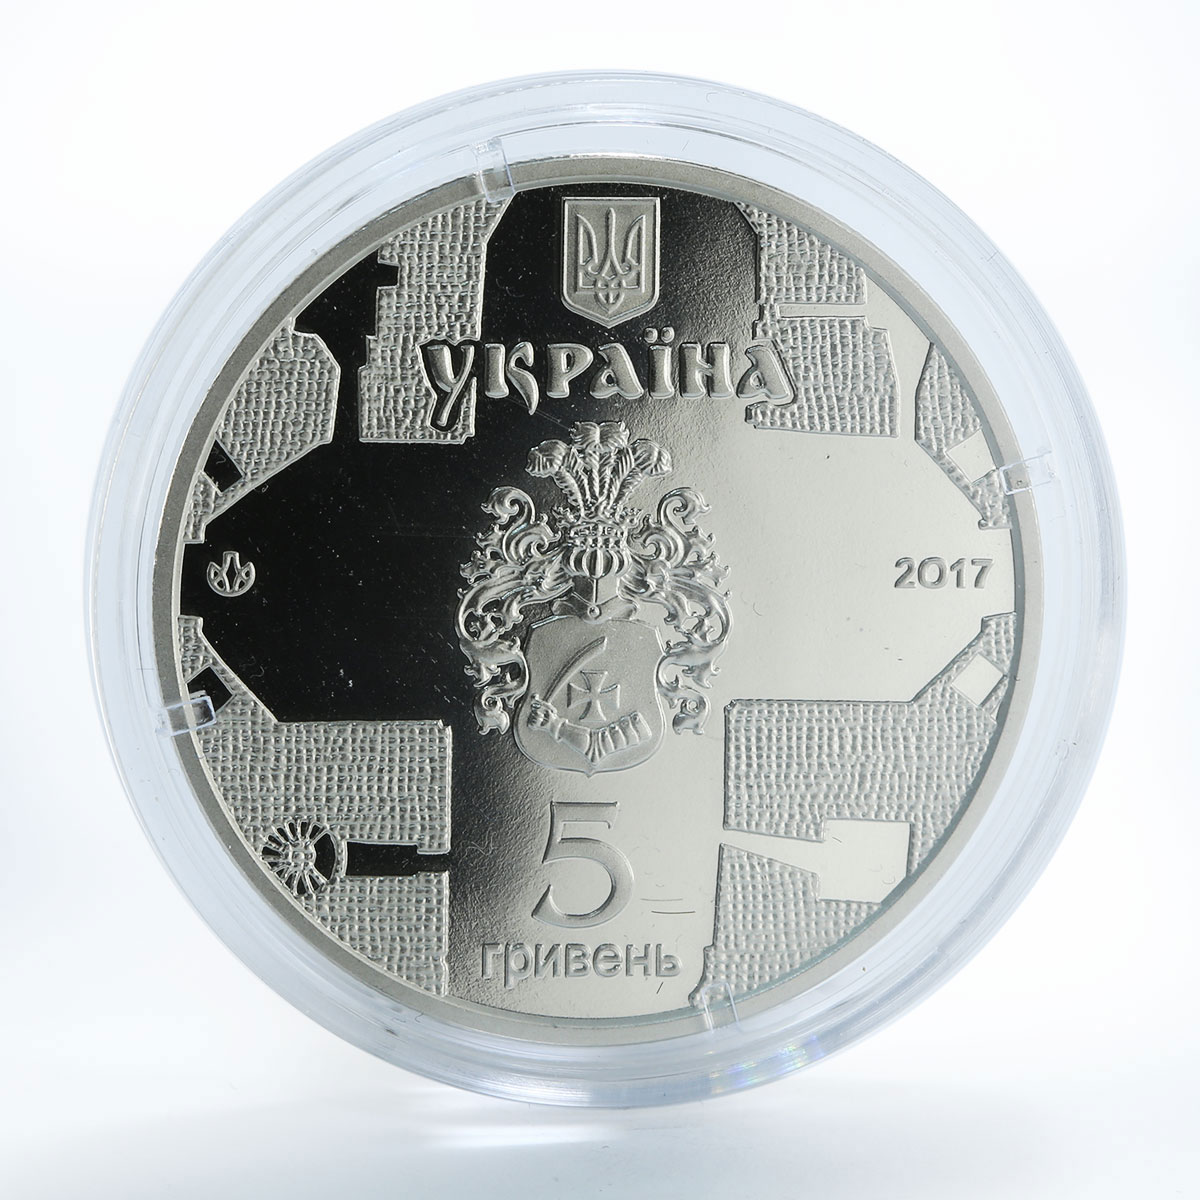 Ukraine 5 hryvnia St. Catherine`s Church in Chernihiv Cossack nickel coin 2017